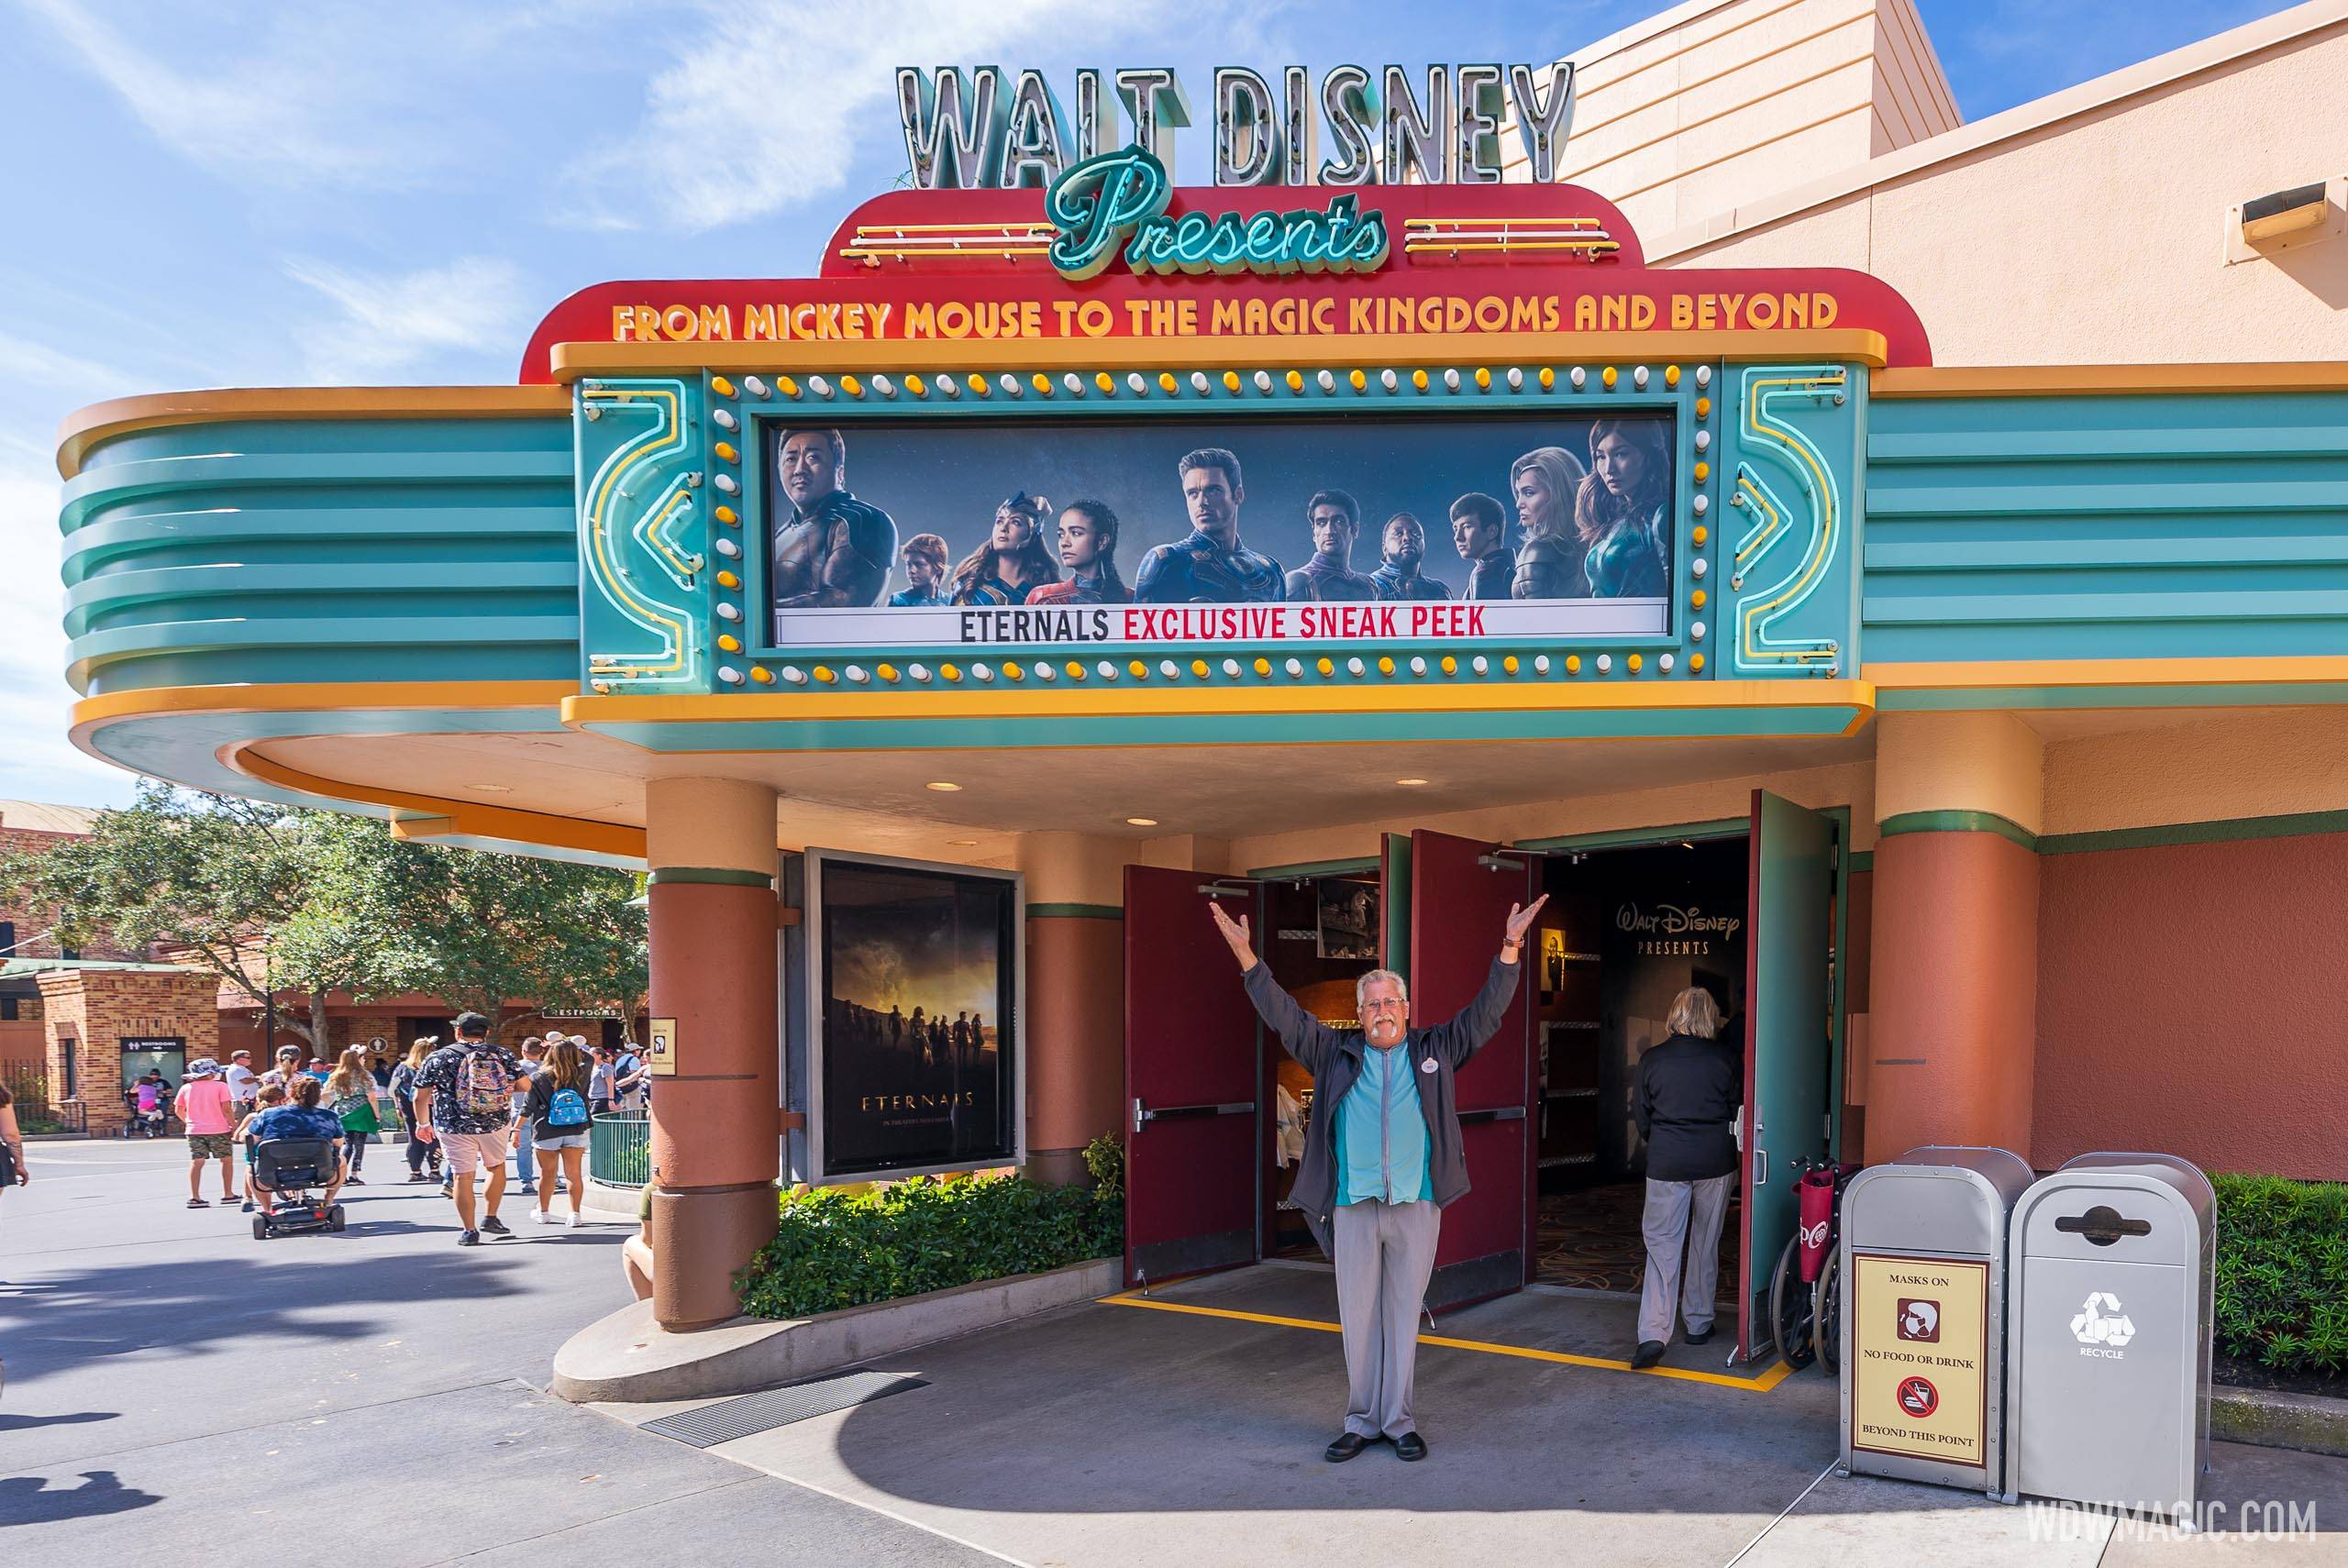 Walt Disney Presents at Disney's Hollywood Studios